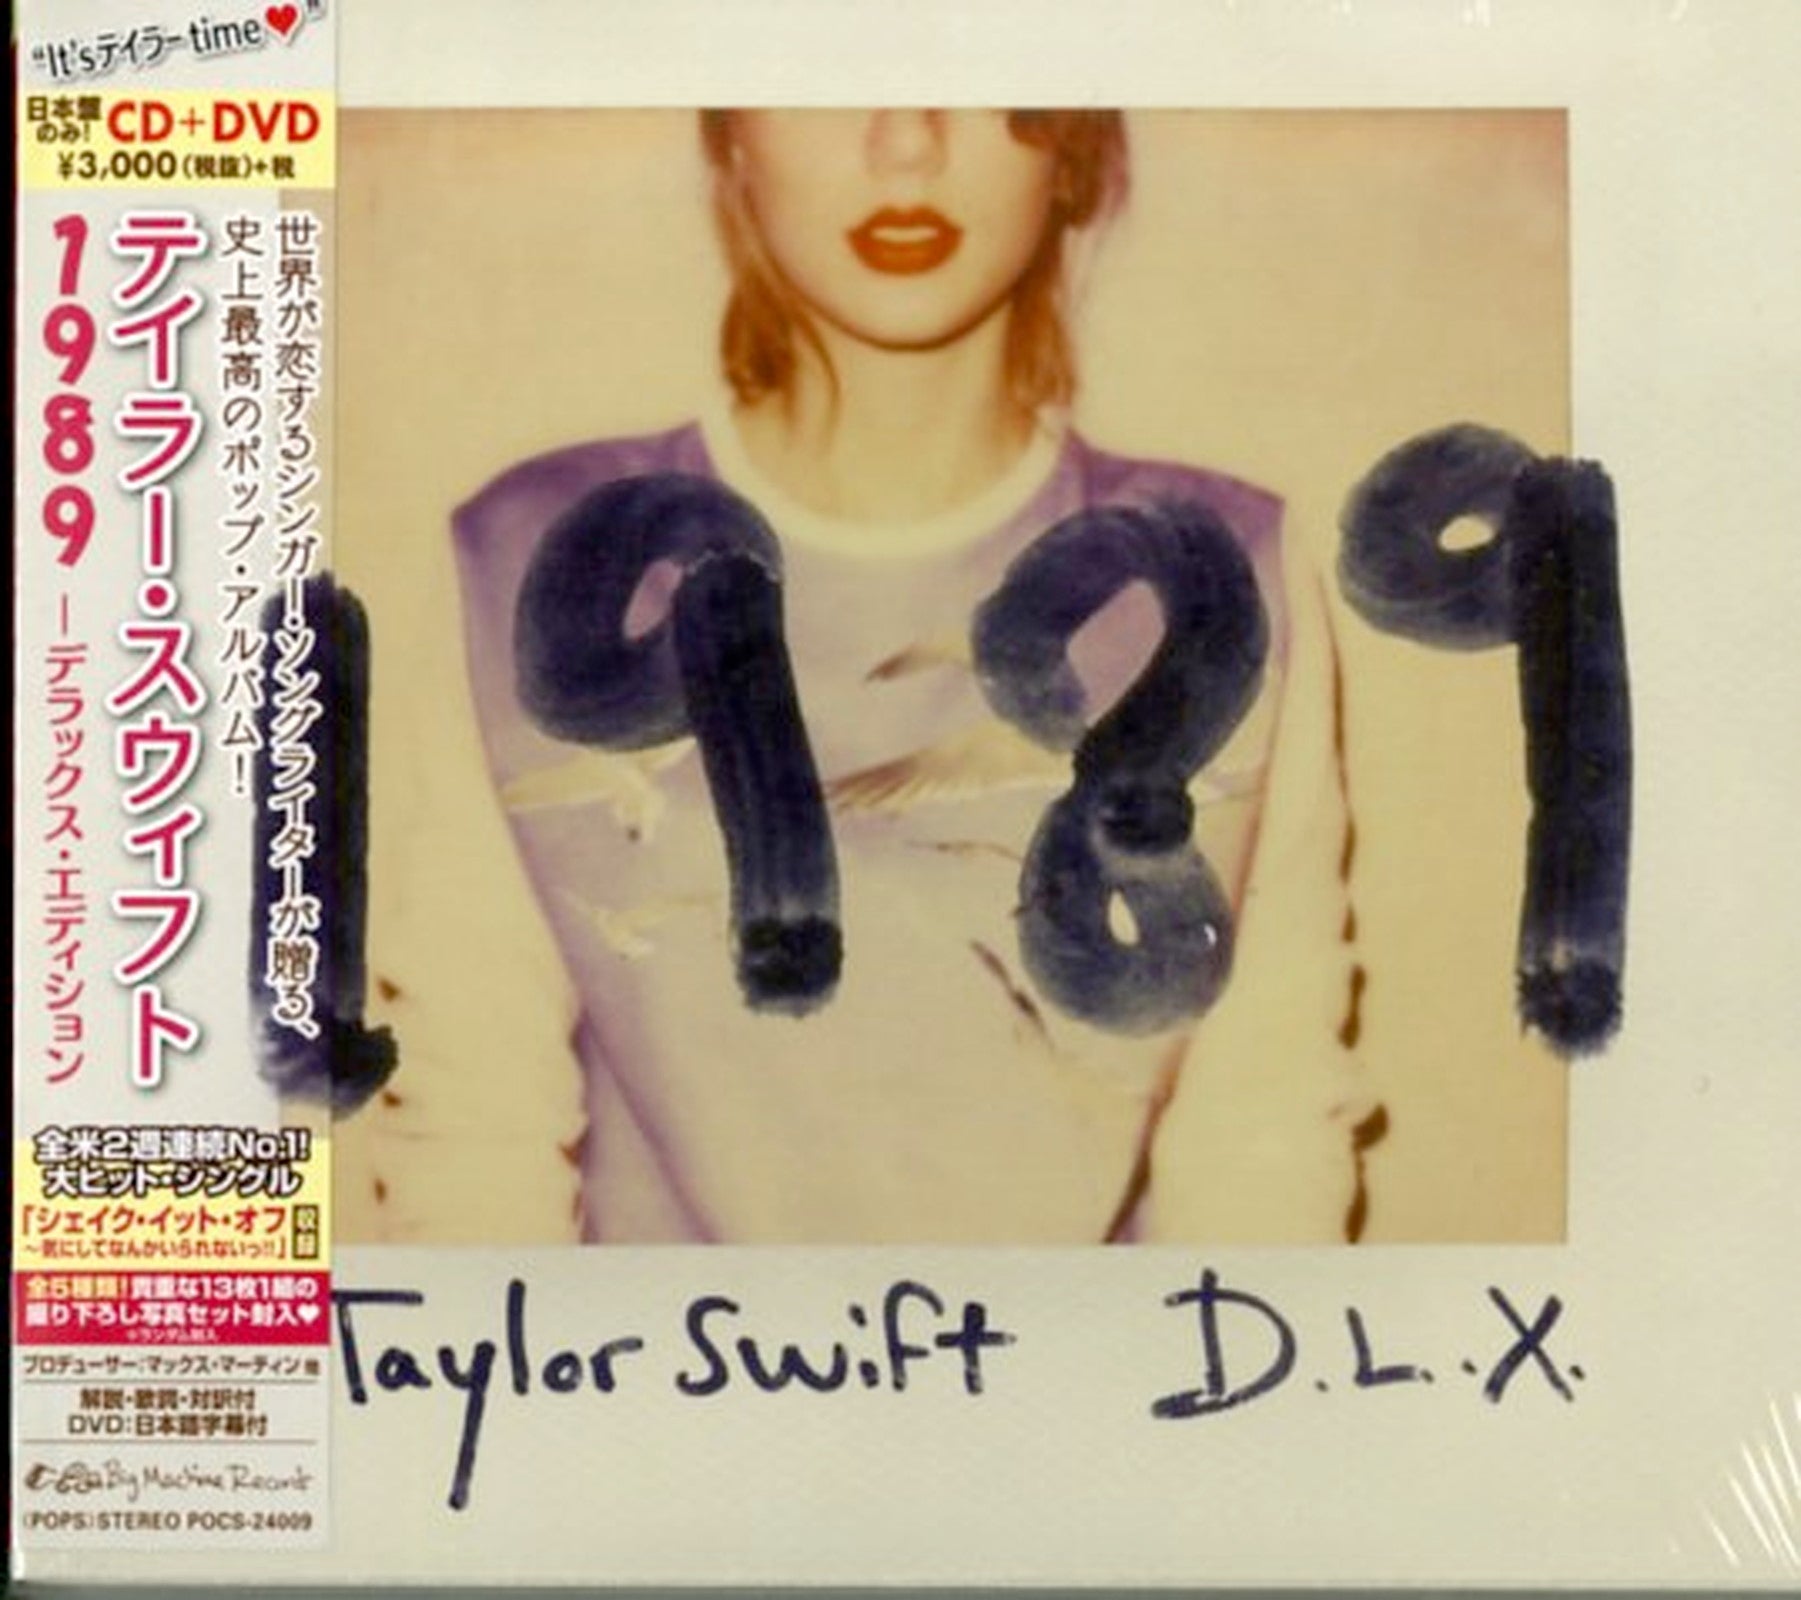 Taylor Swift - 1989 -Deluxe Edition - Japan CD+DVD – CDs Vinyl Japan Store  2010s, 2014, CD, Jewel case, Pop, Taylor Swift 2010s CDs